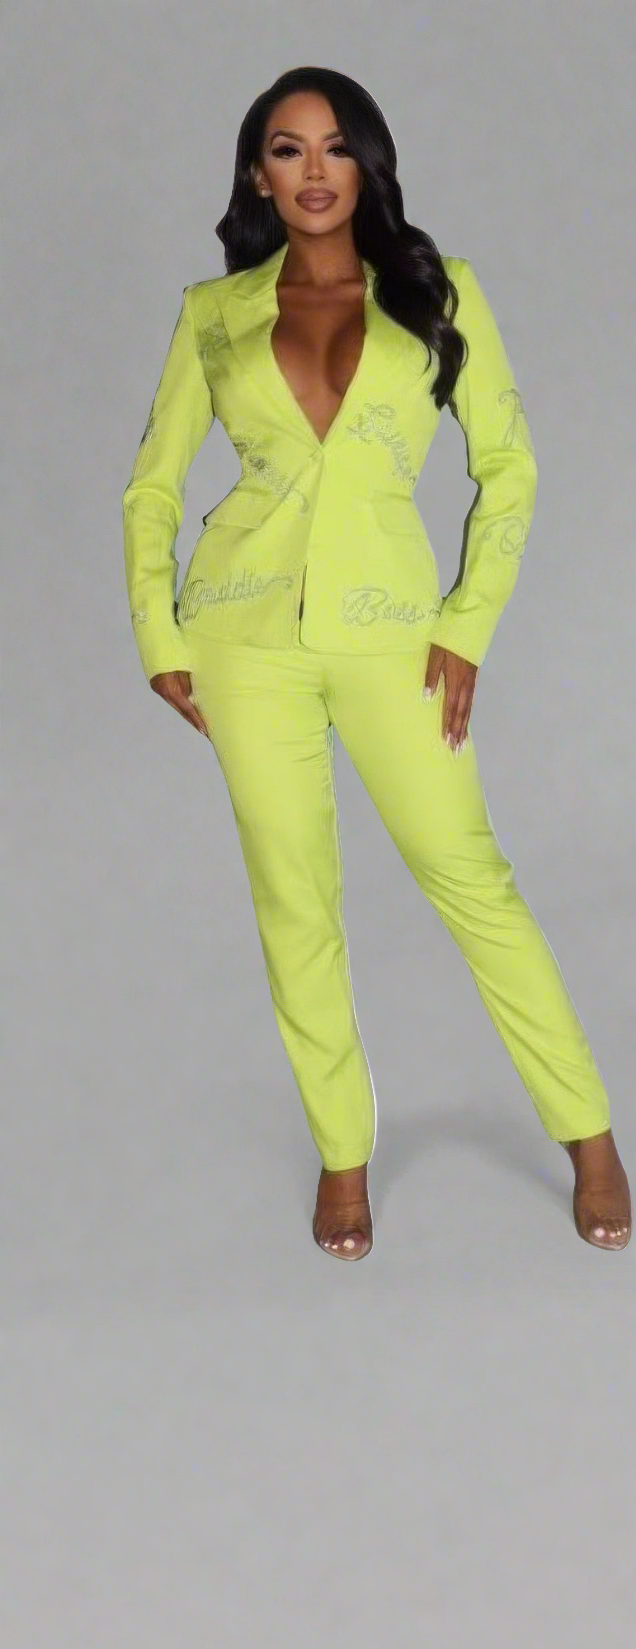 2 Piece Powersuit Blazer & Pants Set with Rhinestone Embellishments - Lime